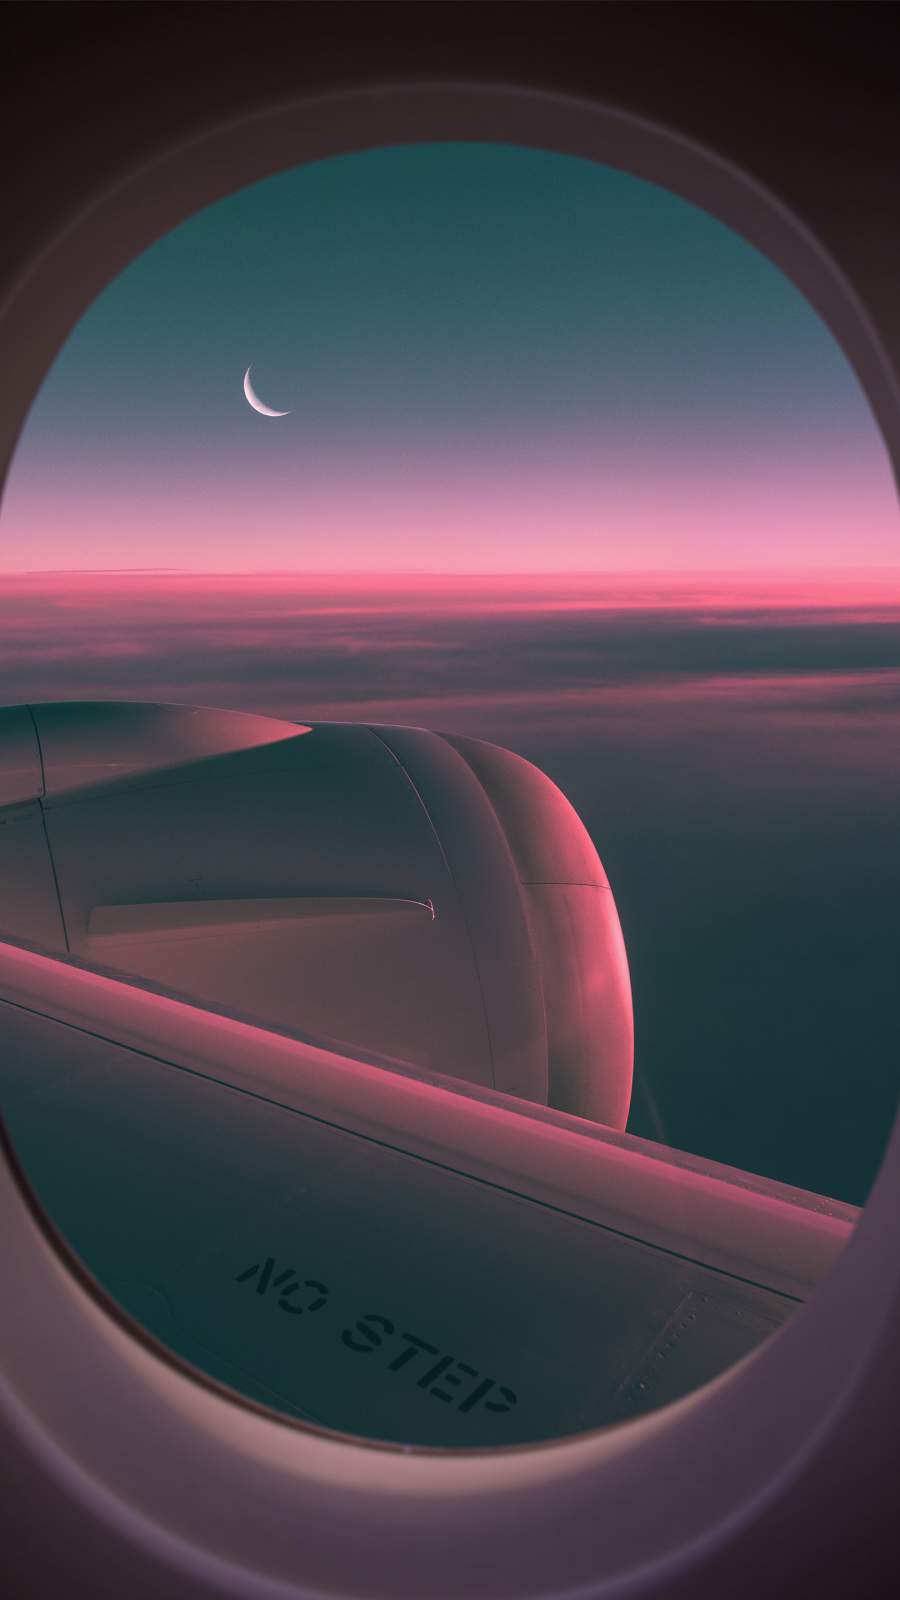 Airplane Window IPhone Wallpaper Wallpaper, iPhone Wallpaper